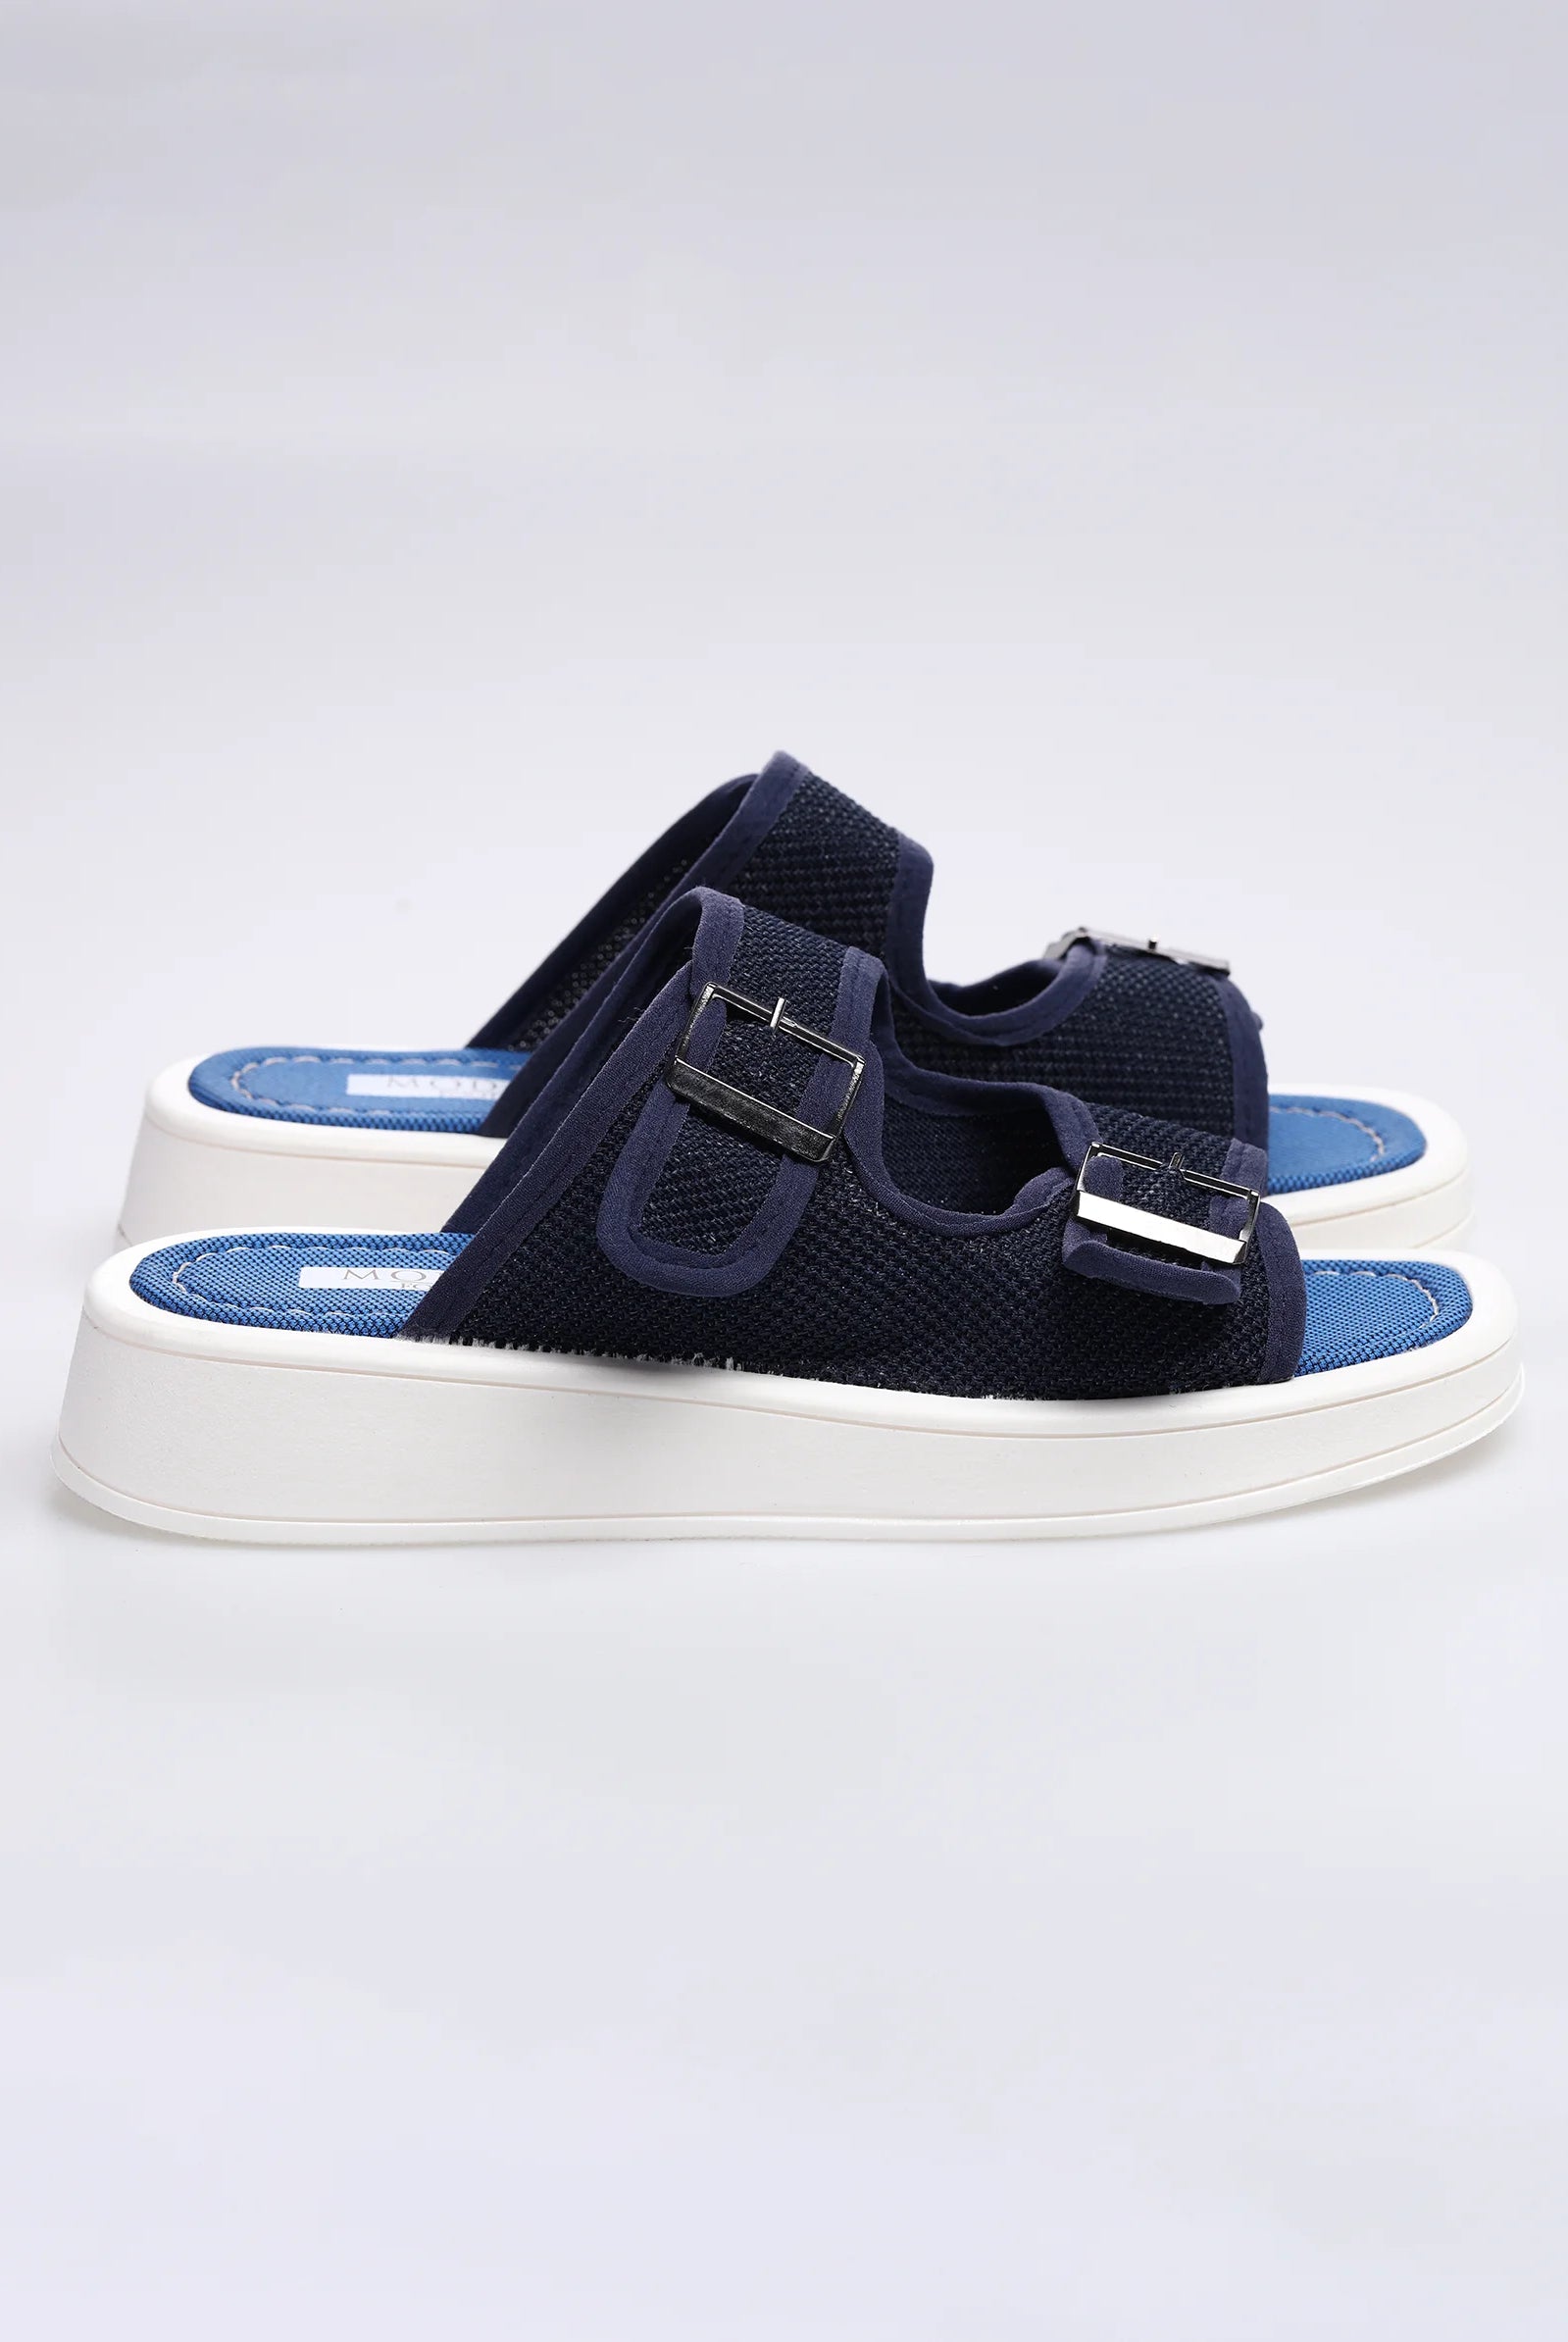 navy blue flat sandals uk